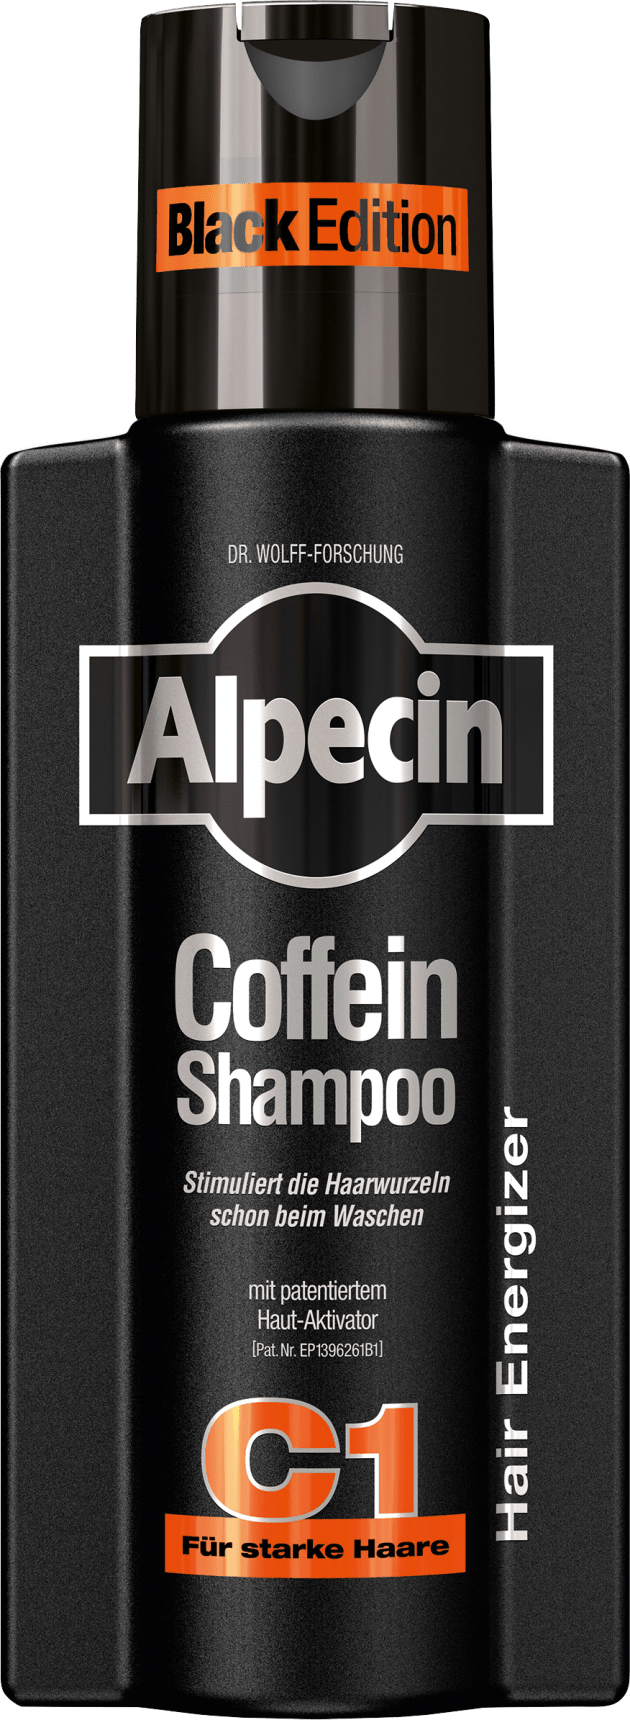 Shampoo Caffeine C1 Black Edition, 250 Ml